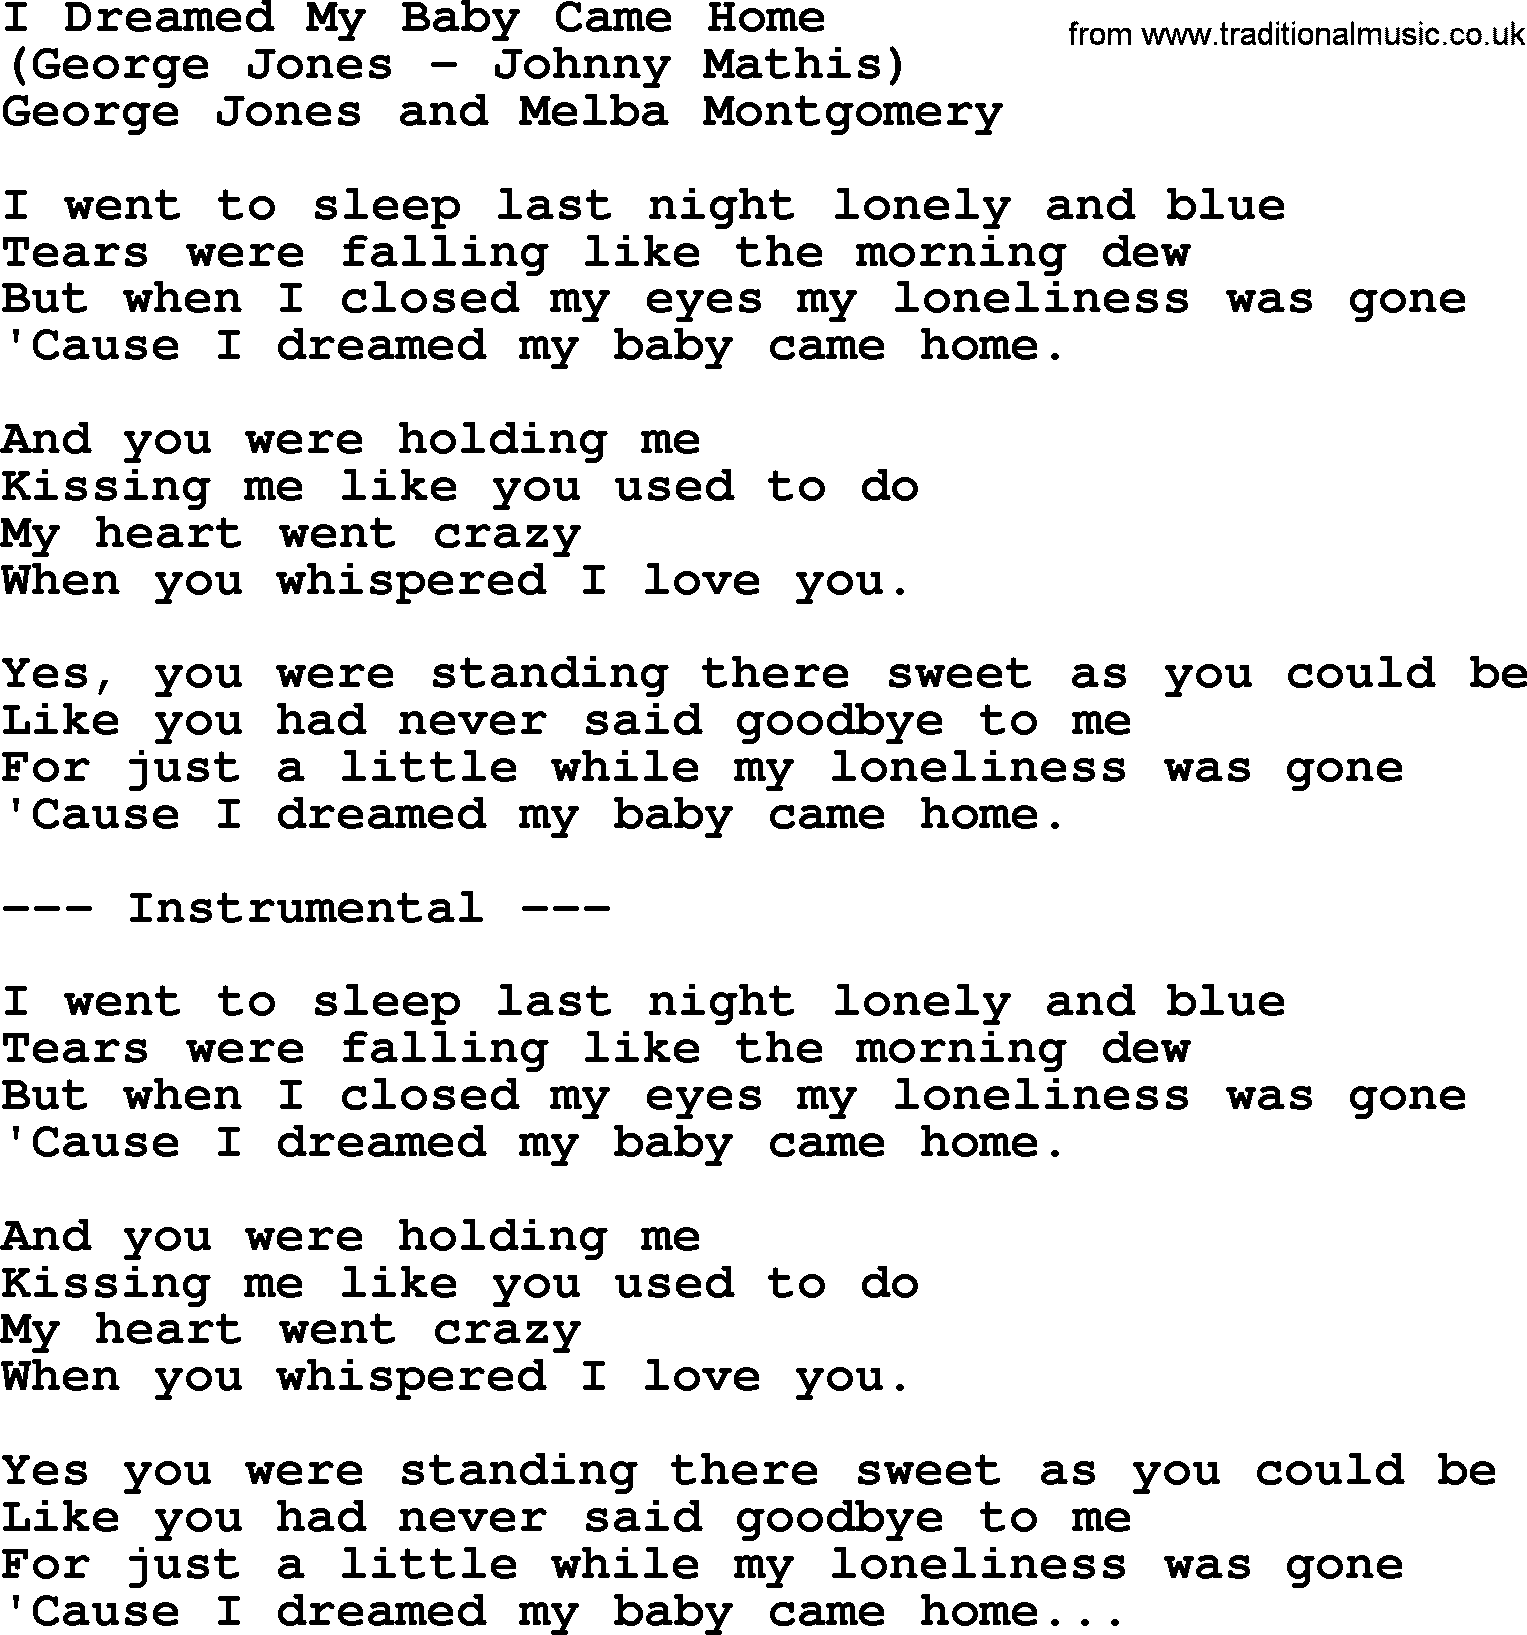 George Jones song: I Dreamed My Baby Came Home, lyrics